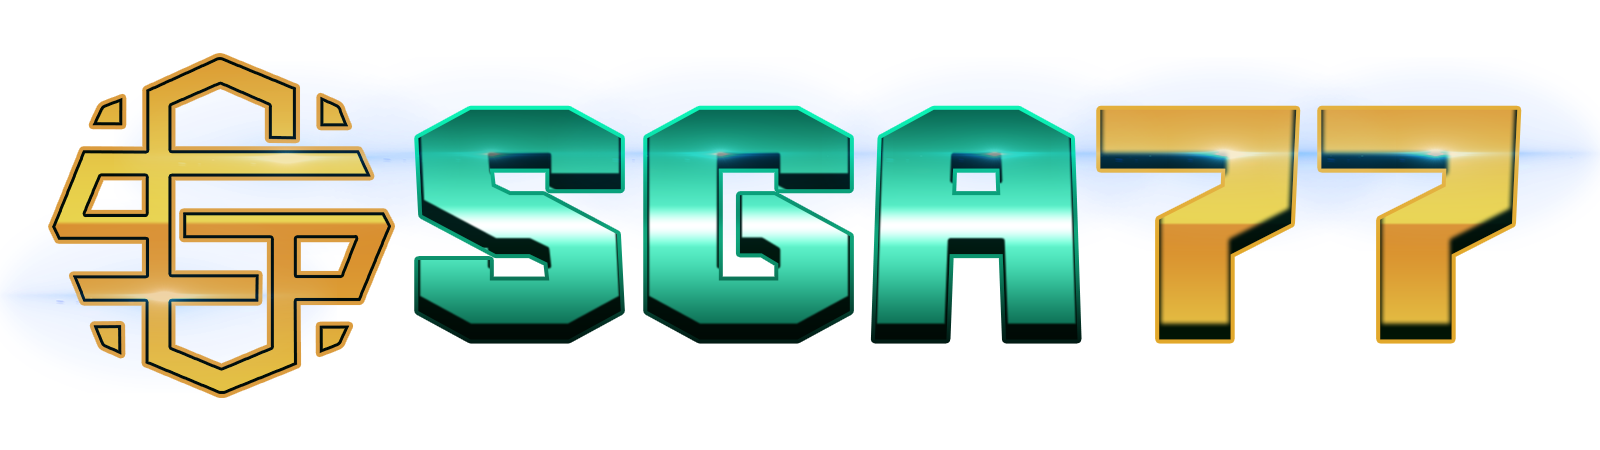 sga77-logo.png